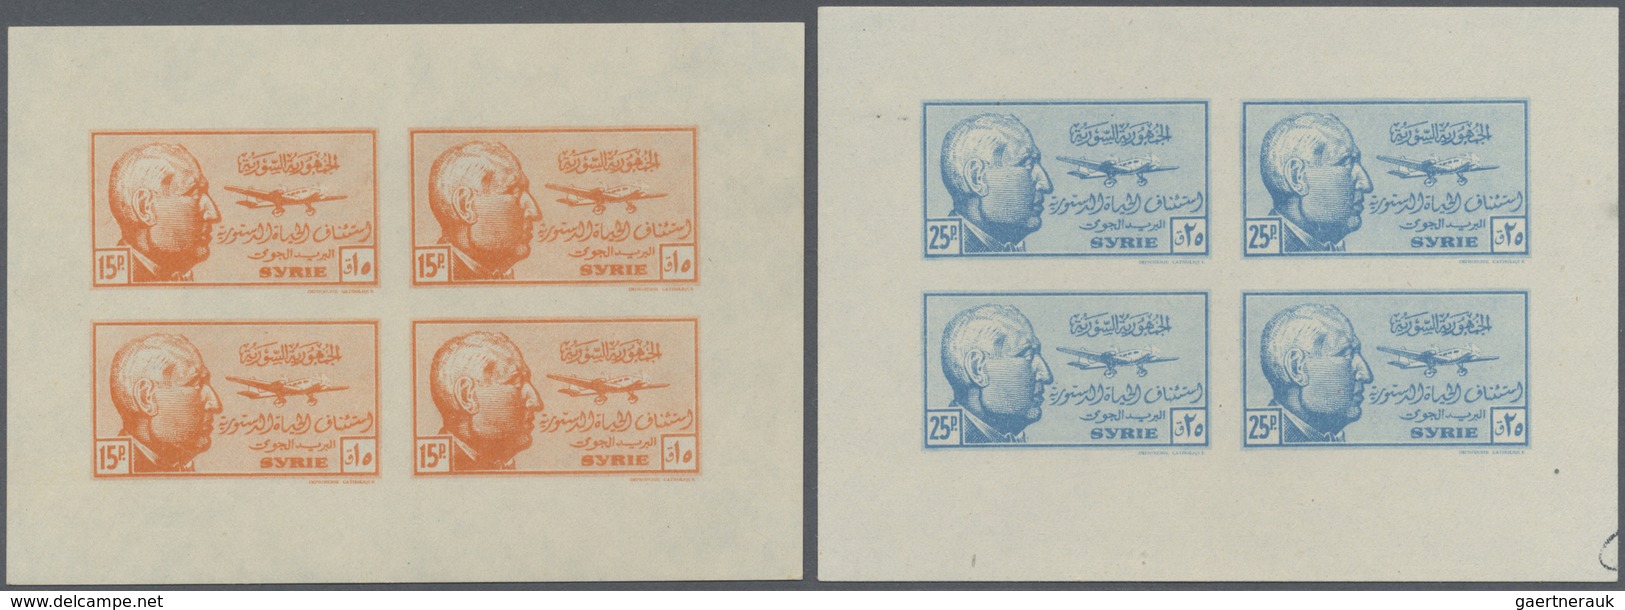 ** Syrien: 1945, President Shukri al-Quwatli, 4pi. to 200pi., set of 13 mini sheets of four stamps each